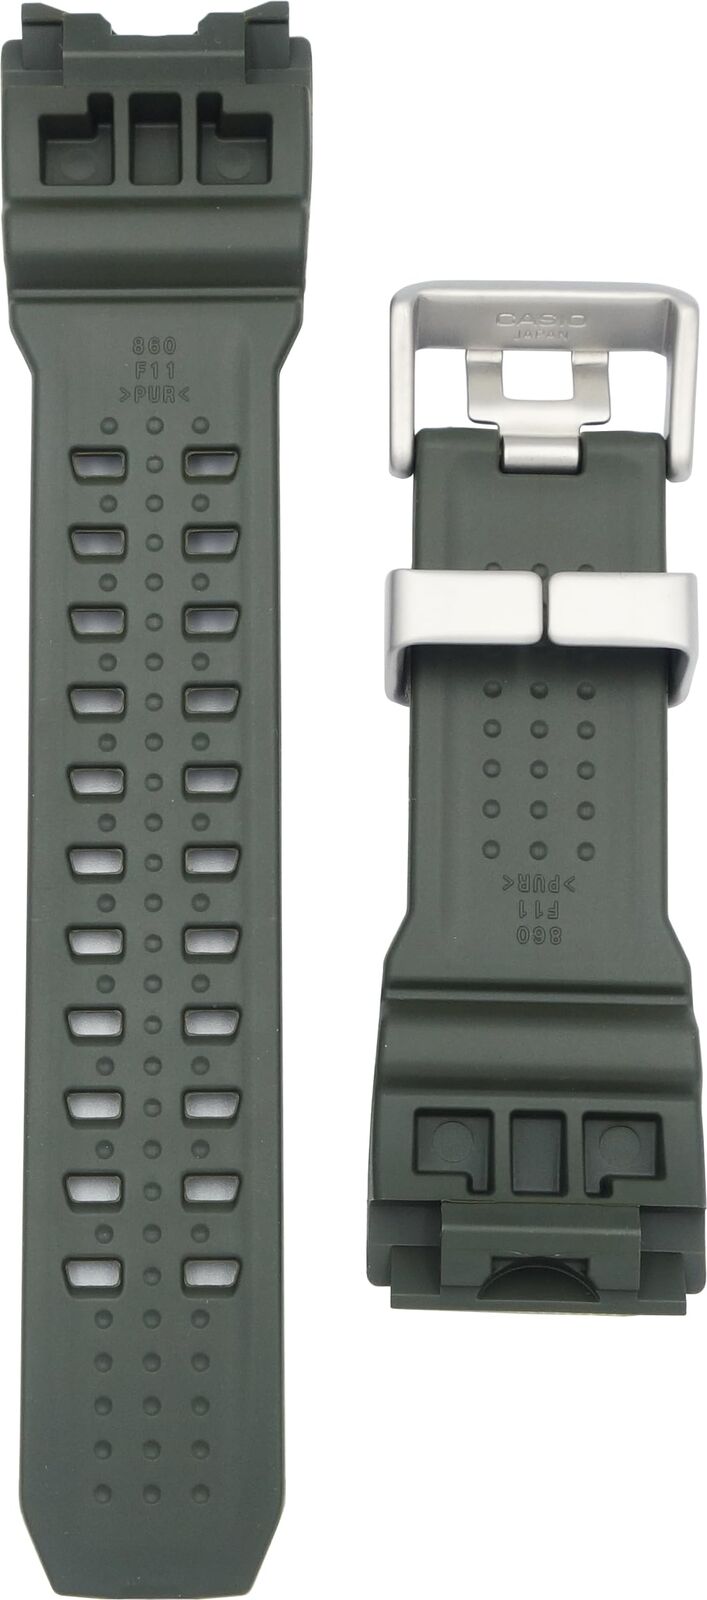 Casio Original Watchband For Model GWG-1000 -1A3 Green MUD RESIST